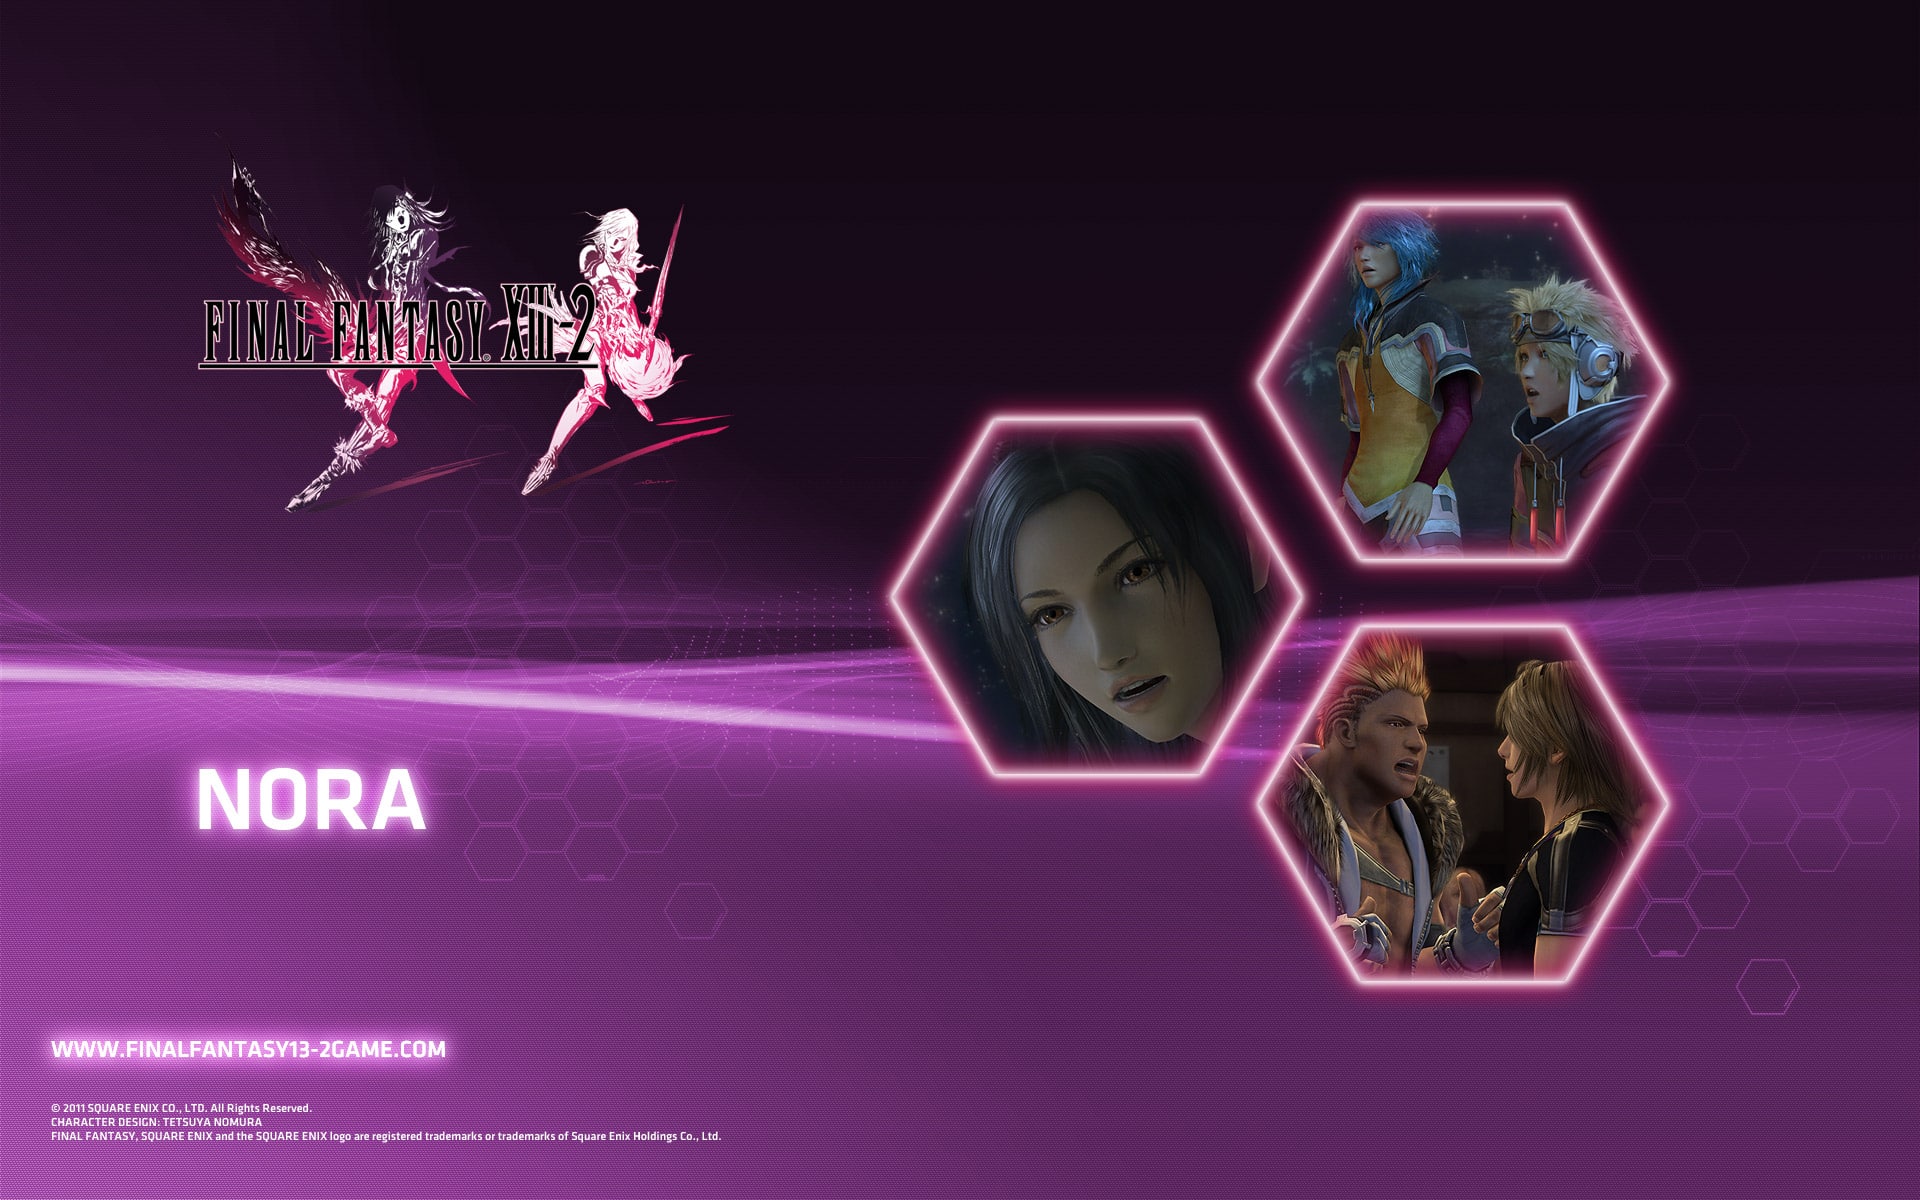 Final Fantasy XIII-2 Nora Wallpaper